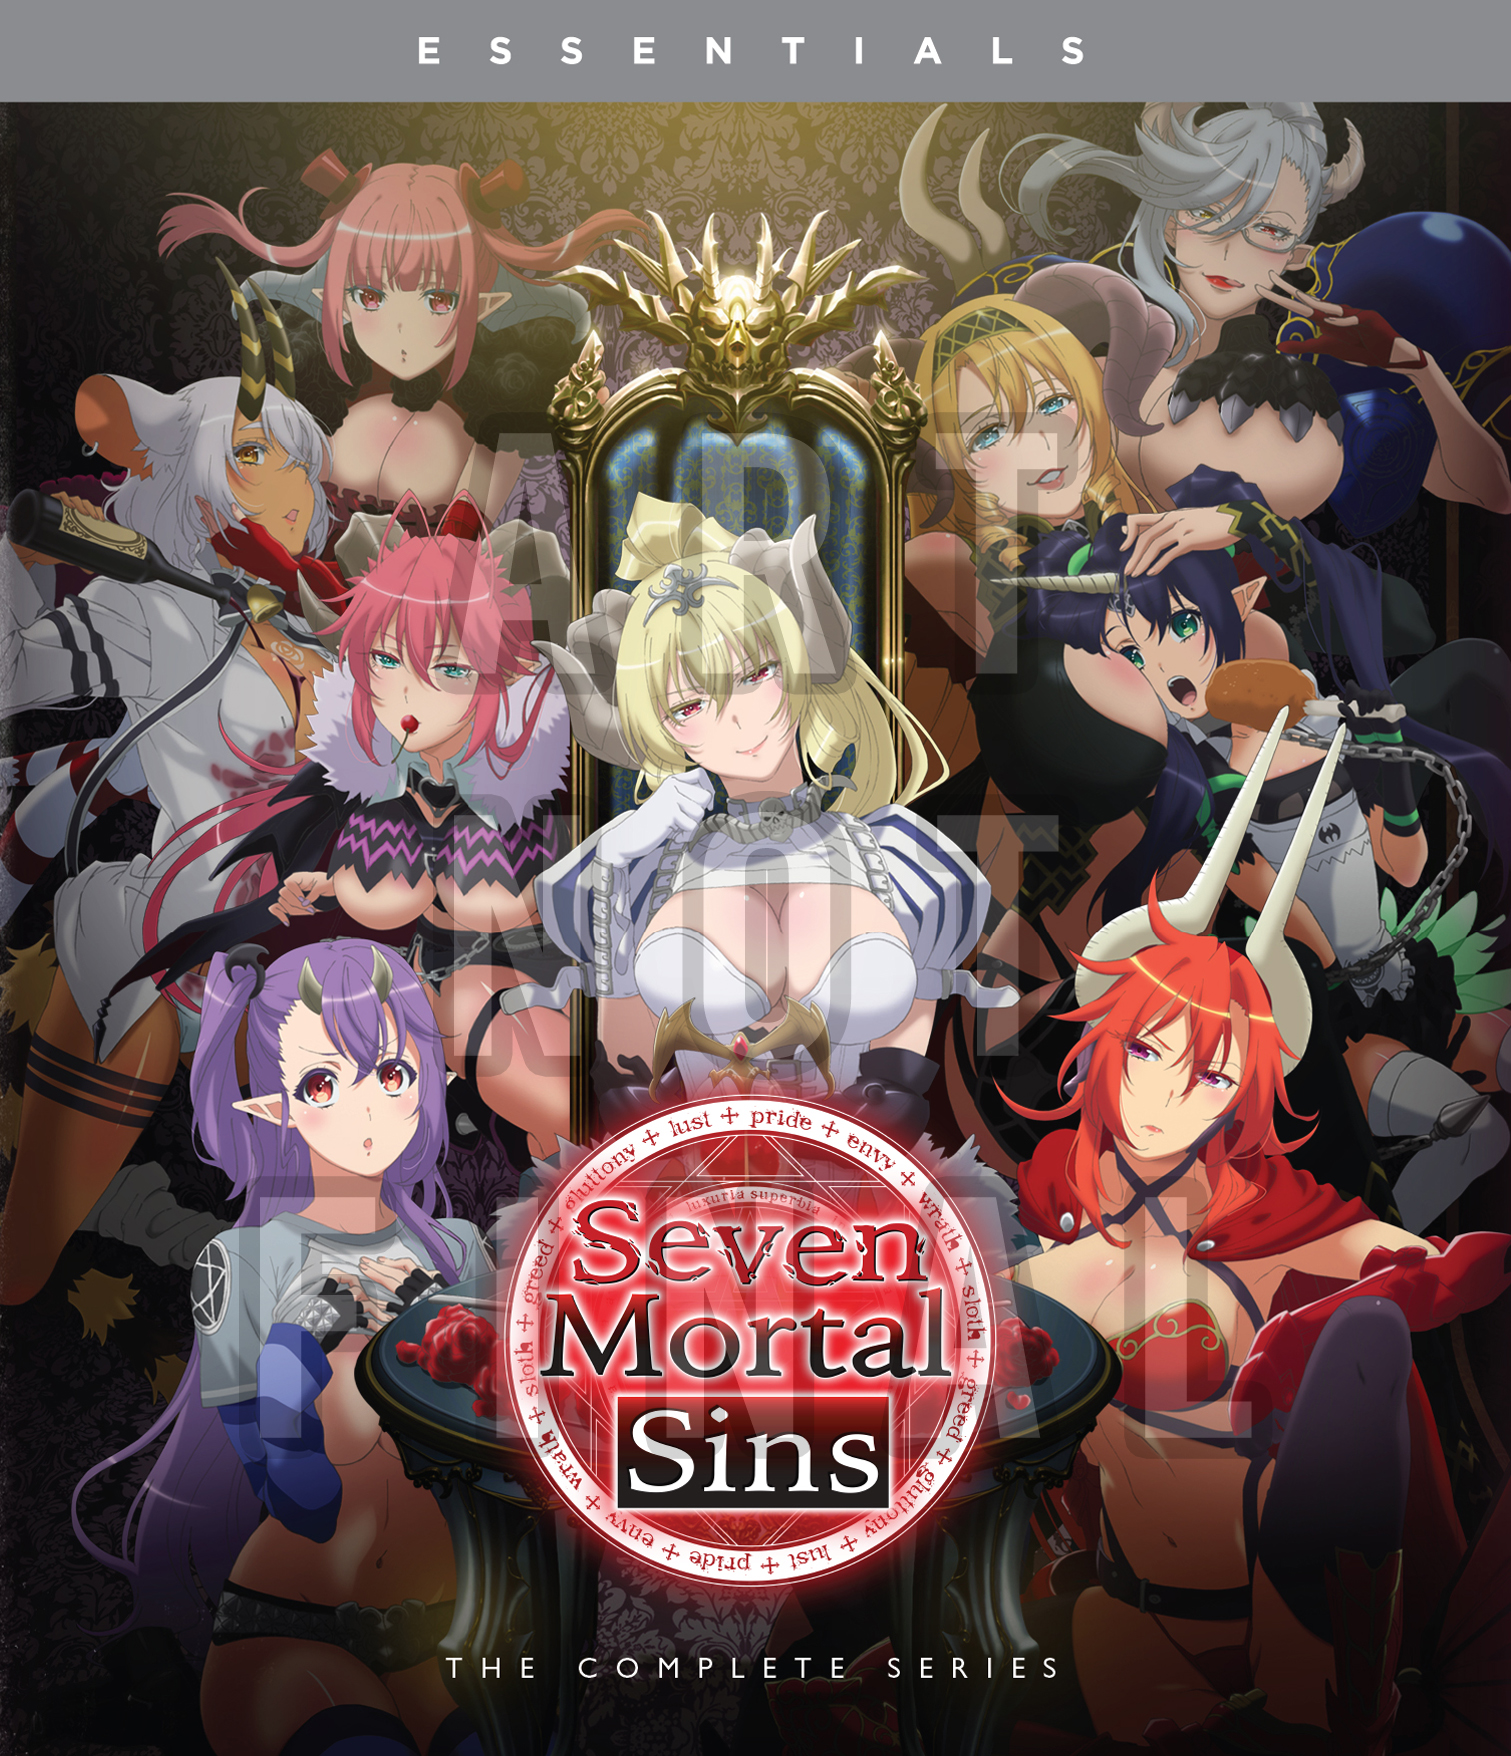 Seven Mortal Sins - Wikipedia